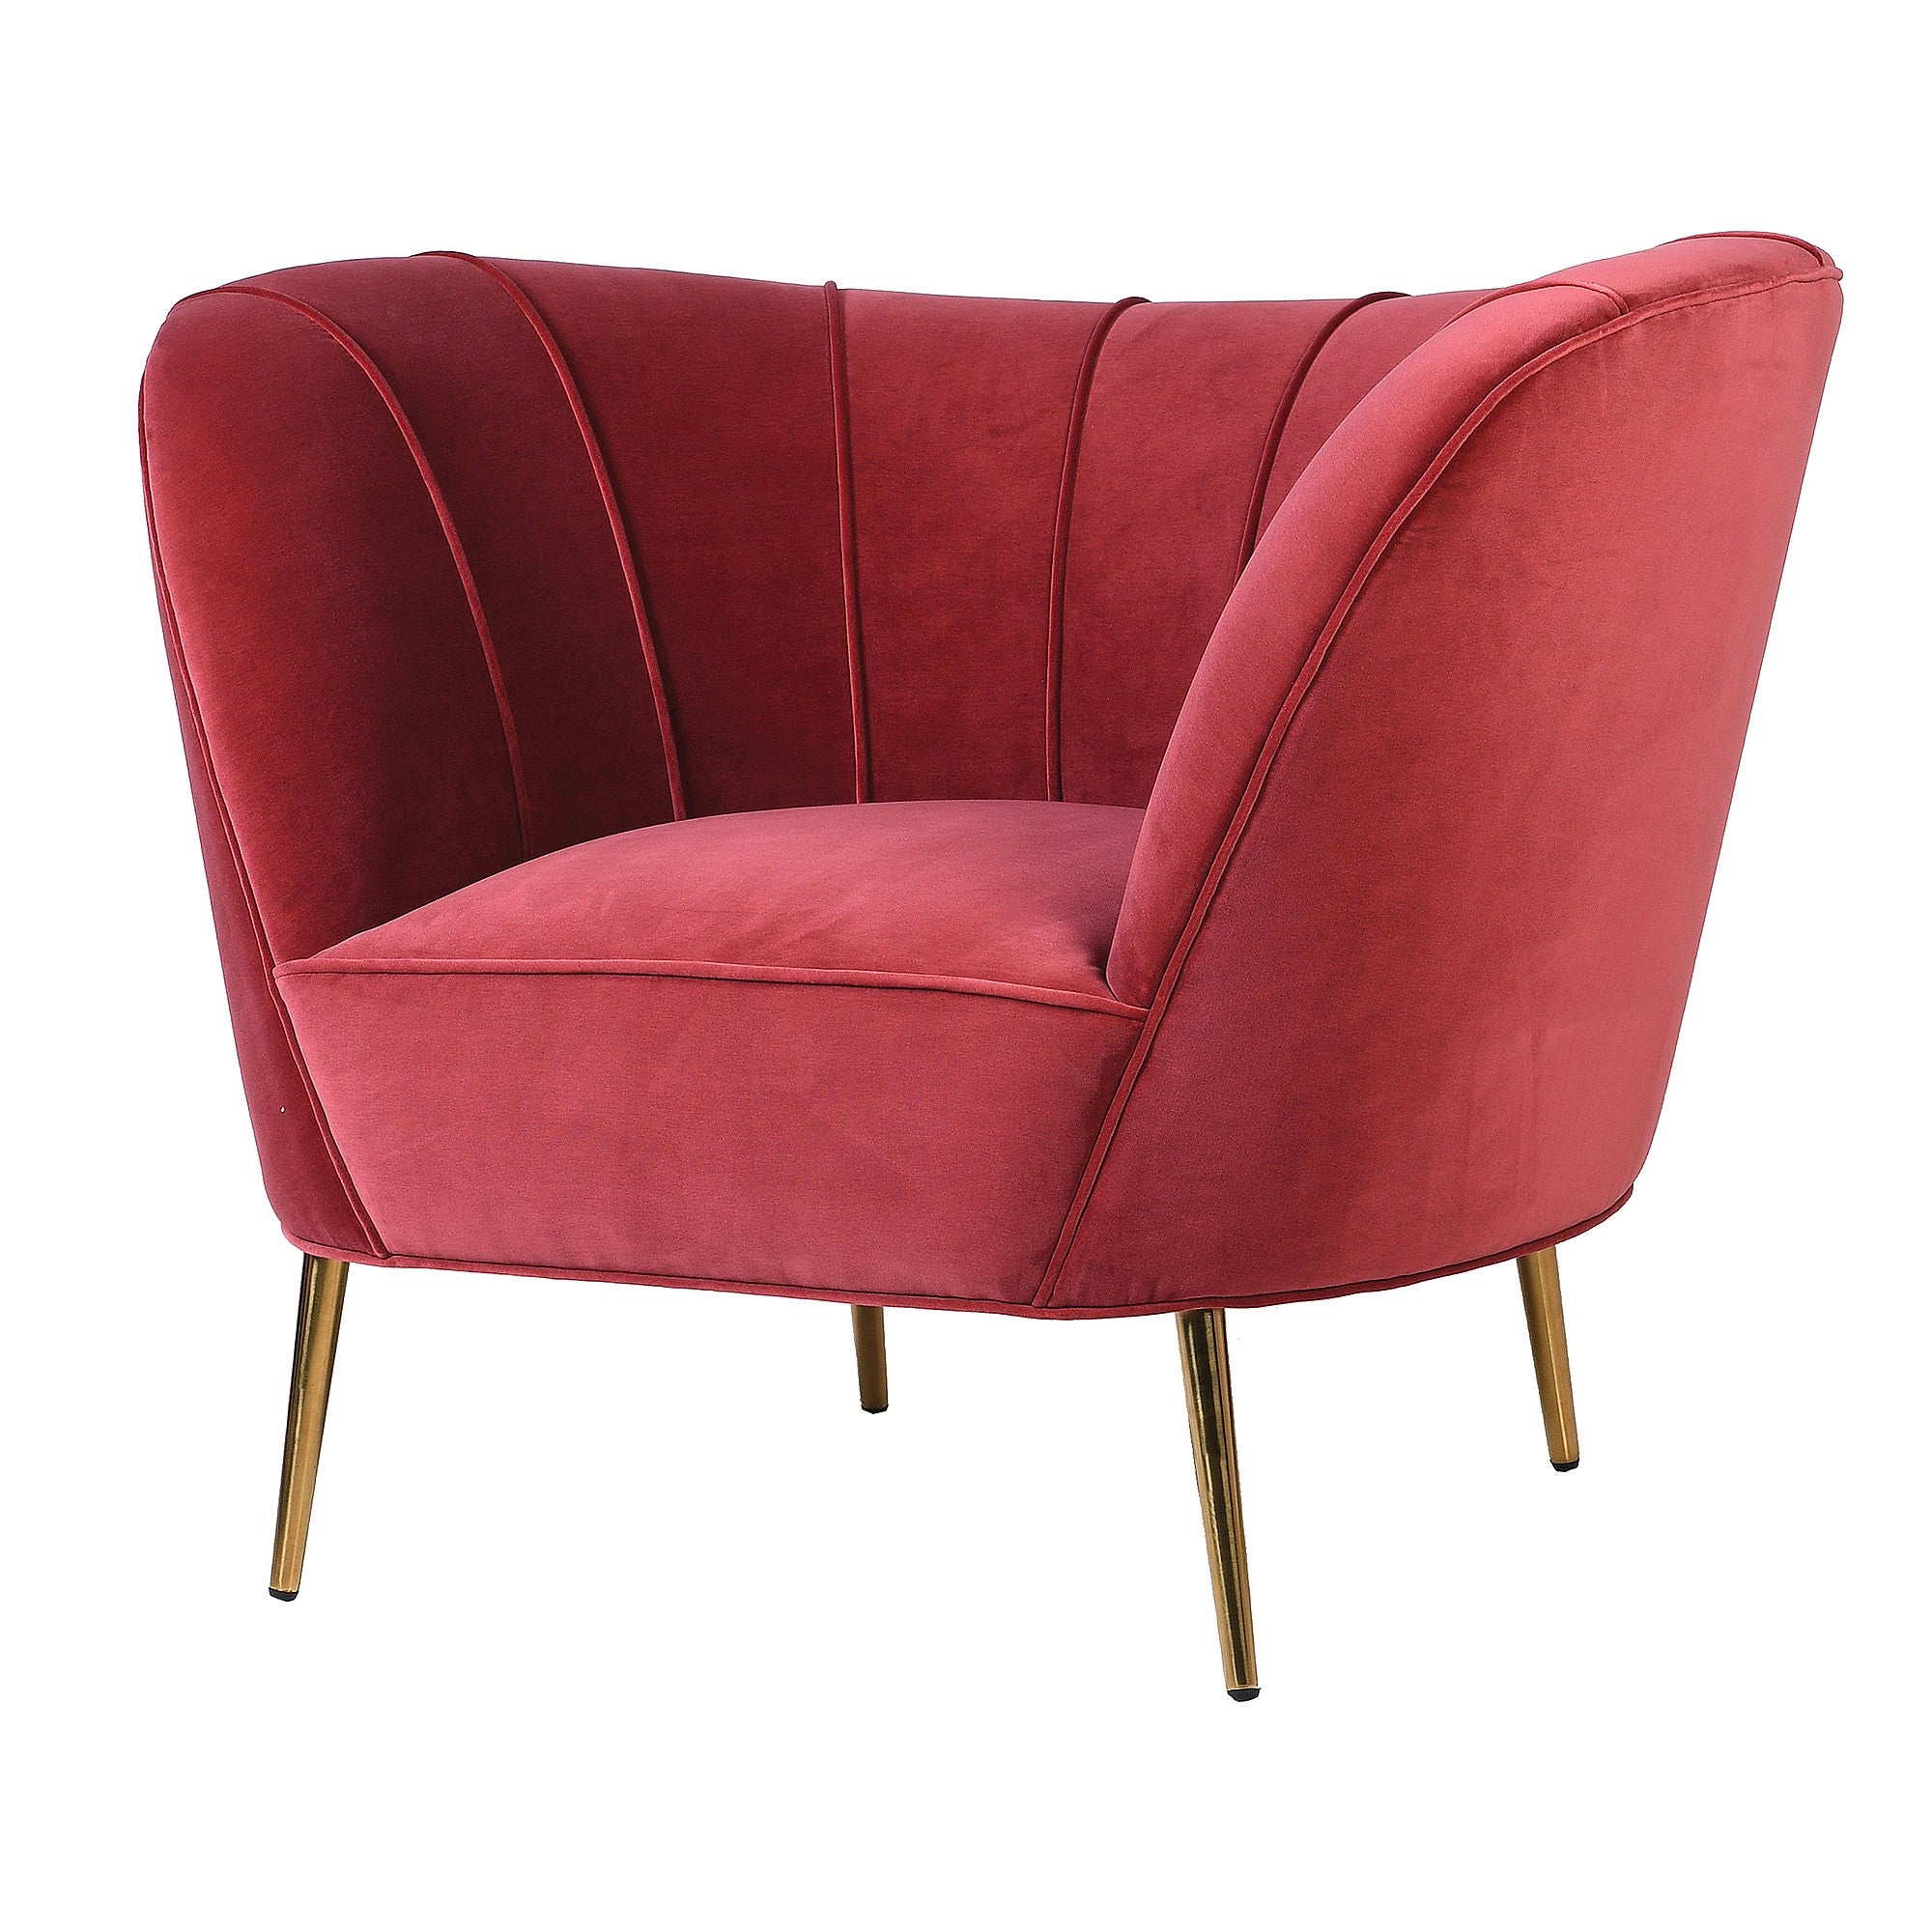 The Curvarella Cherry Pink Velvet Chair